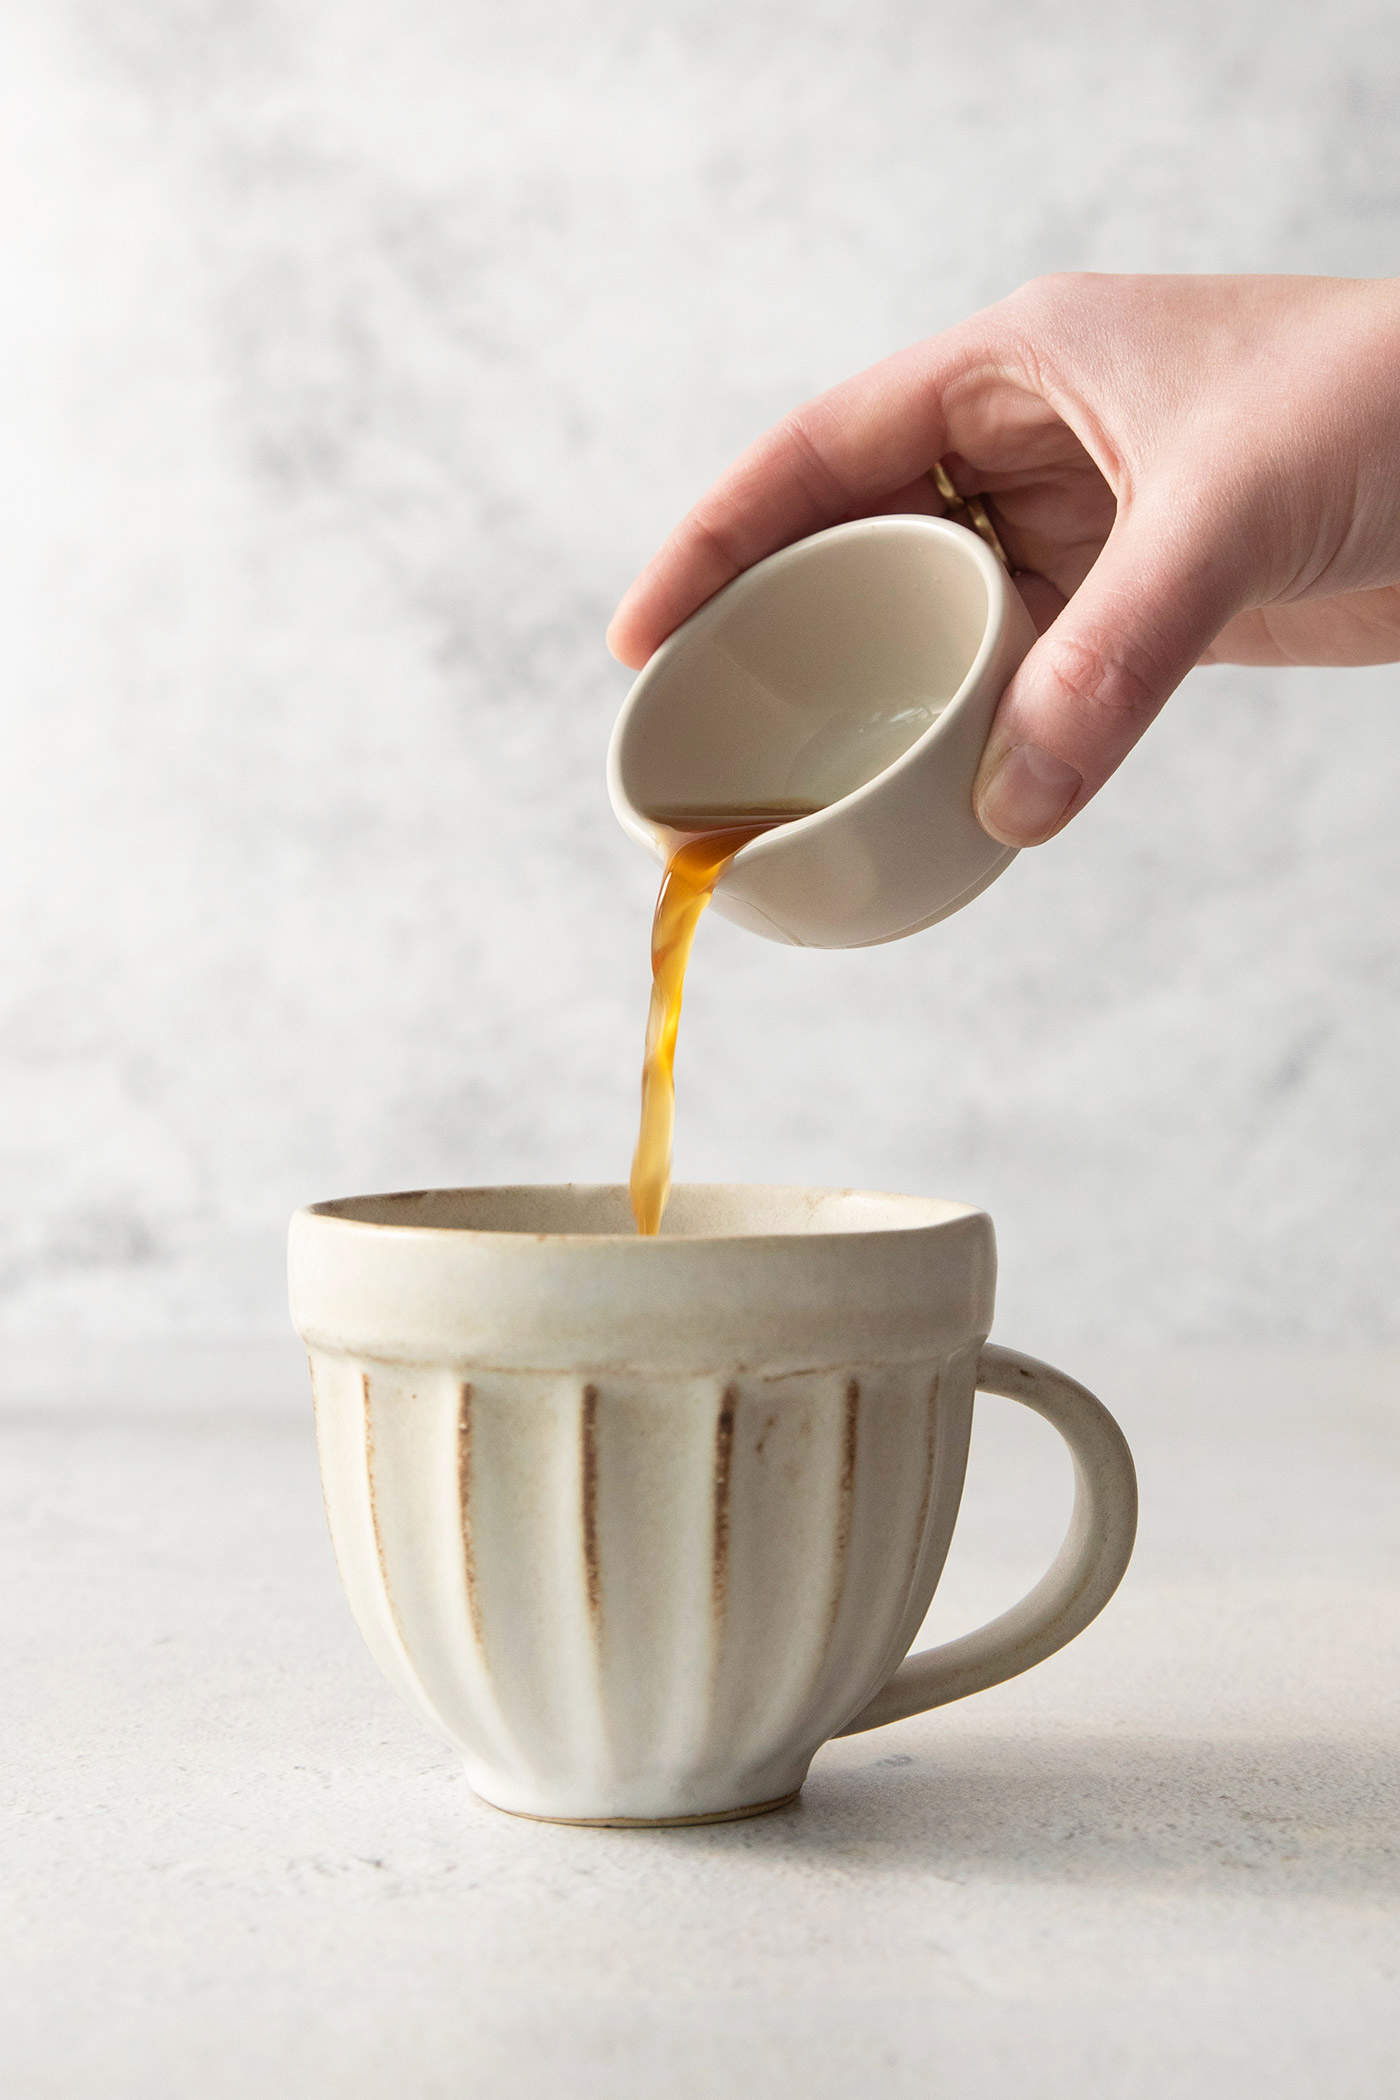 adding chai concentrate to a mug